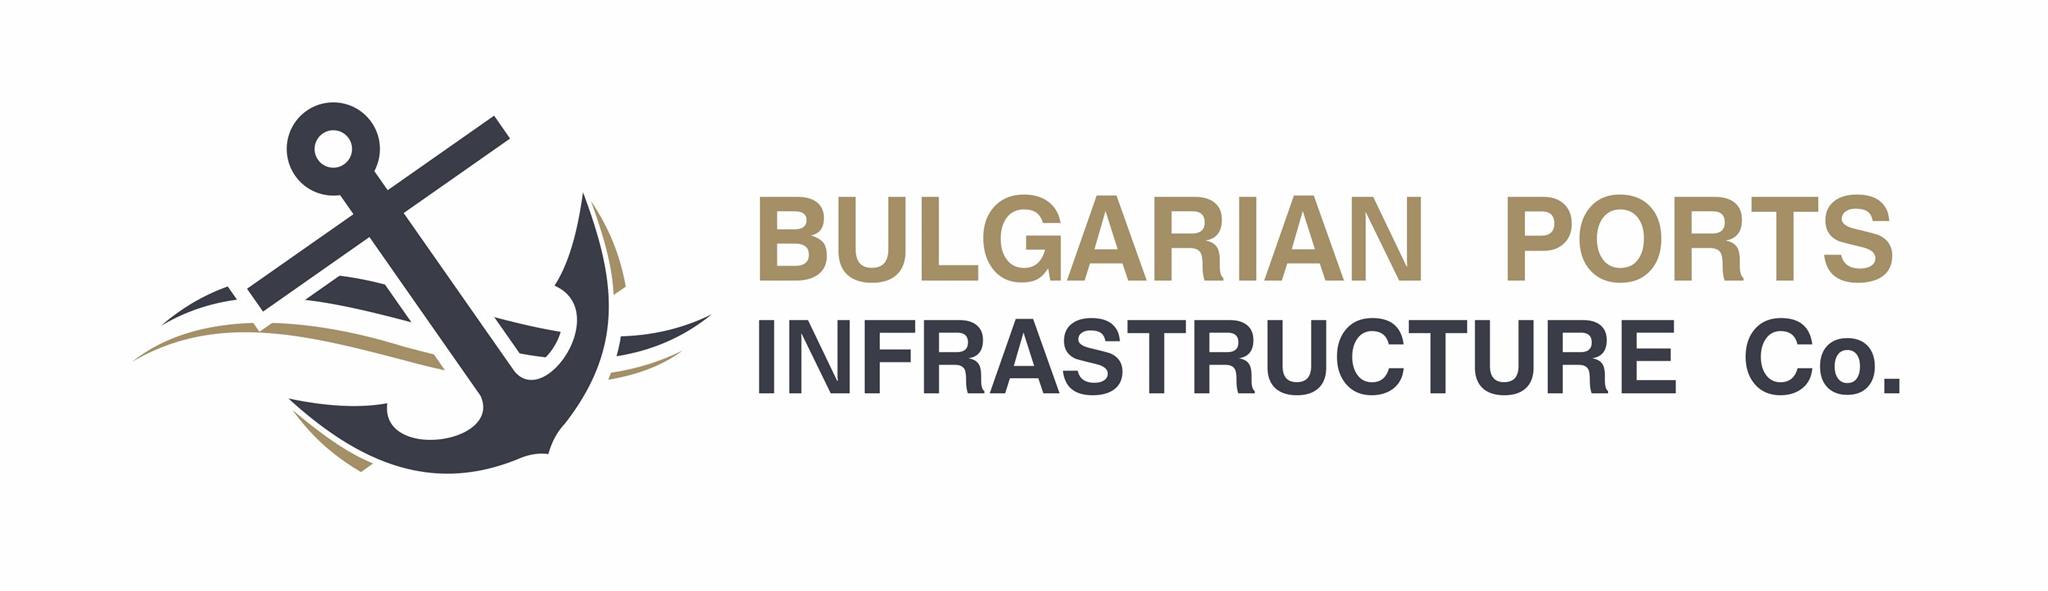 Bulgarian ports